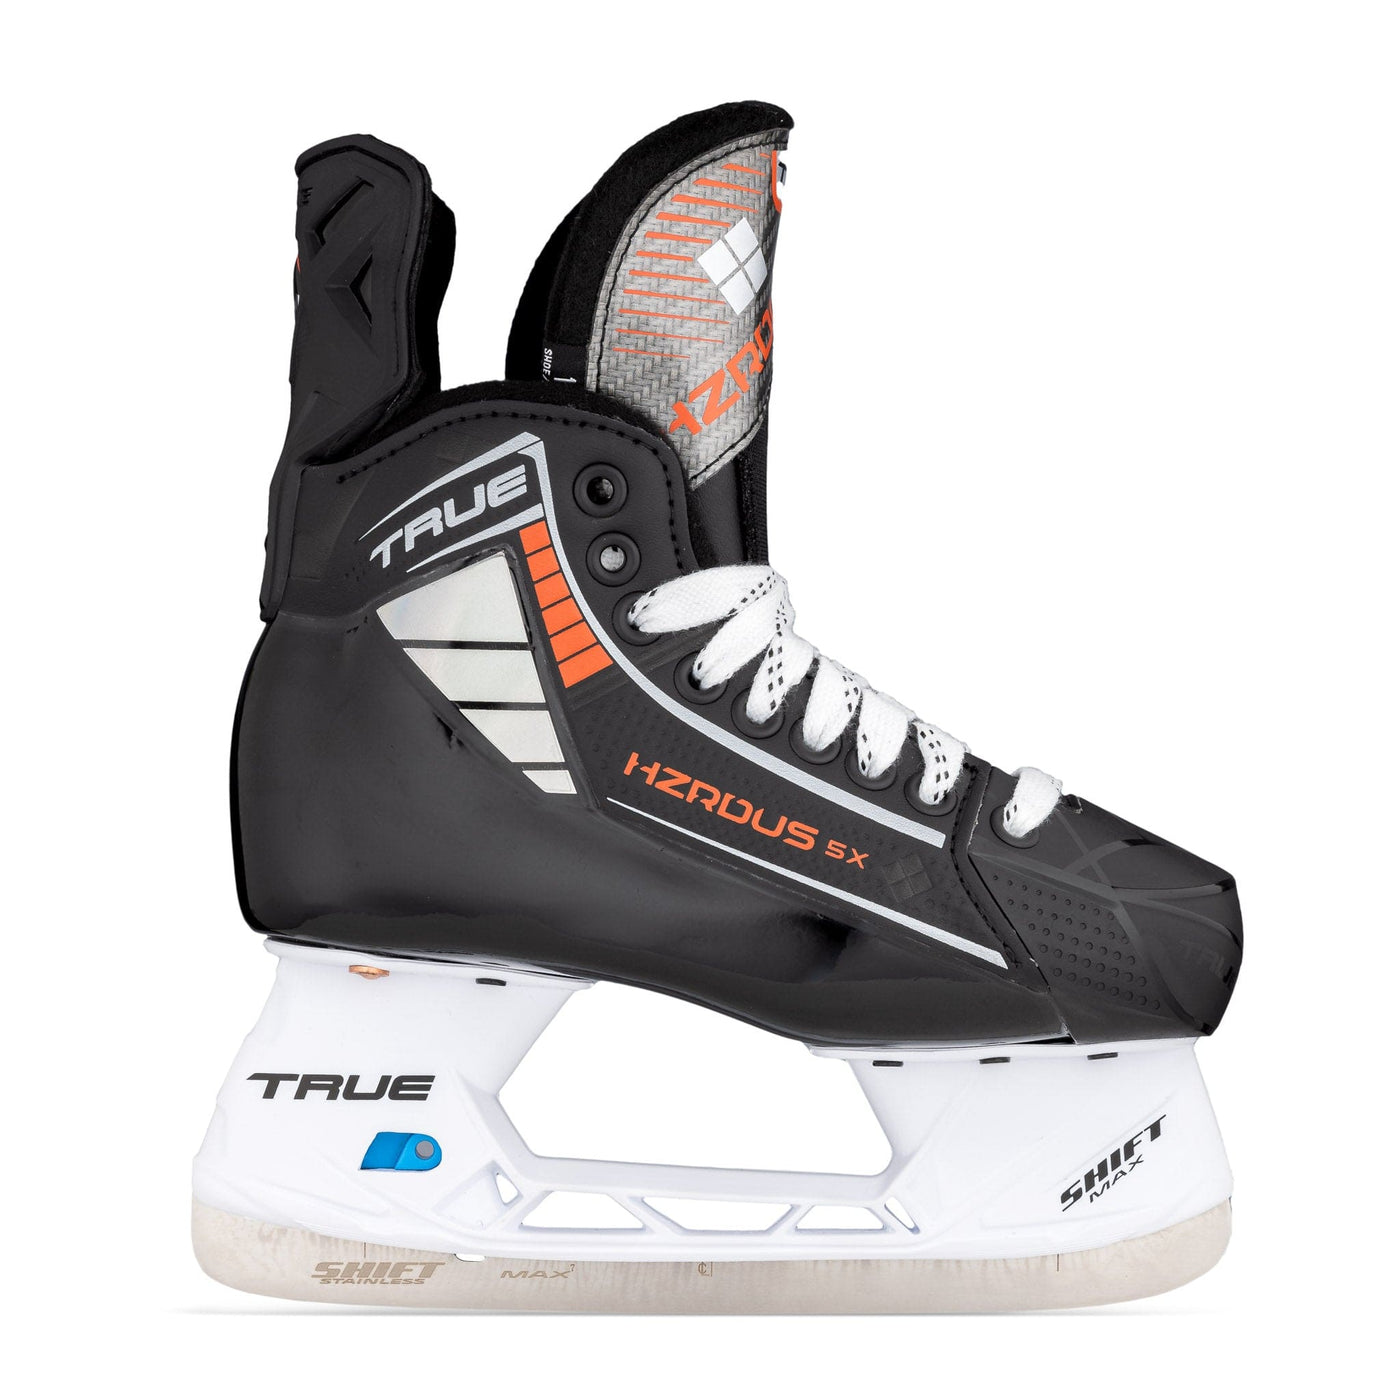 True HZRDUS 5X Junior Hockey Skates - The Hockey Shop Source For Sports